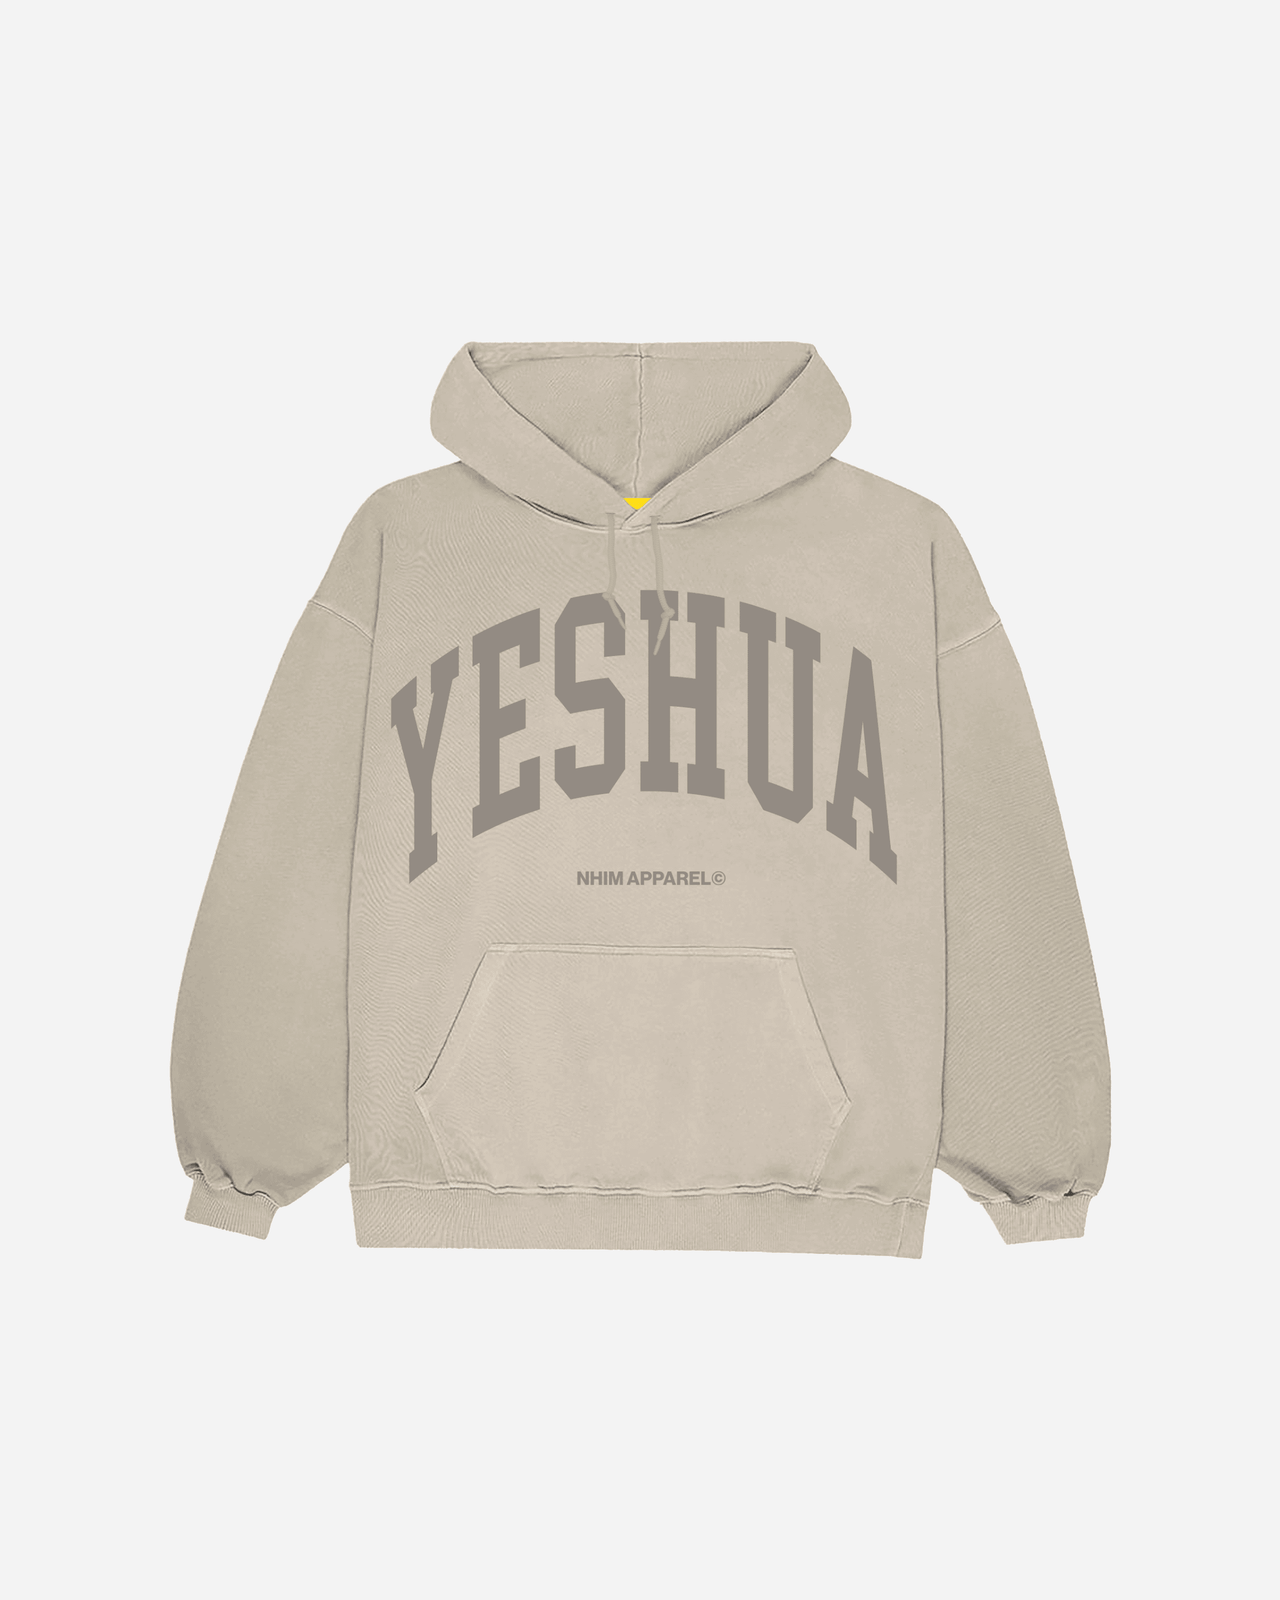 Yeshua hoodie YESHUA logo sand color hooded sweatshirt made by NHIM APPAREL christian clothing brand